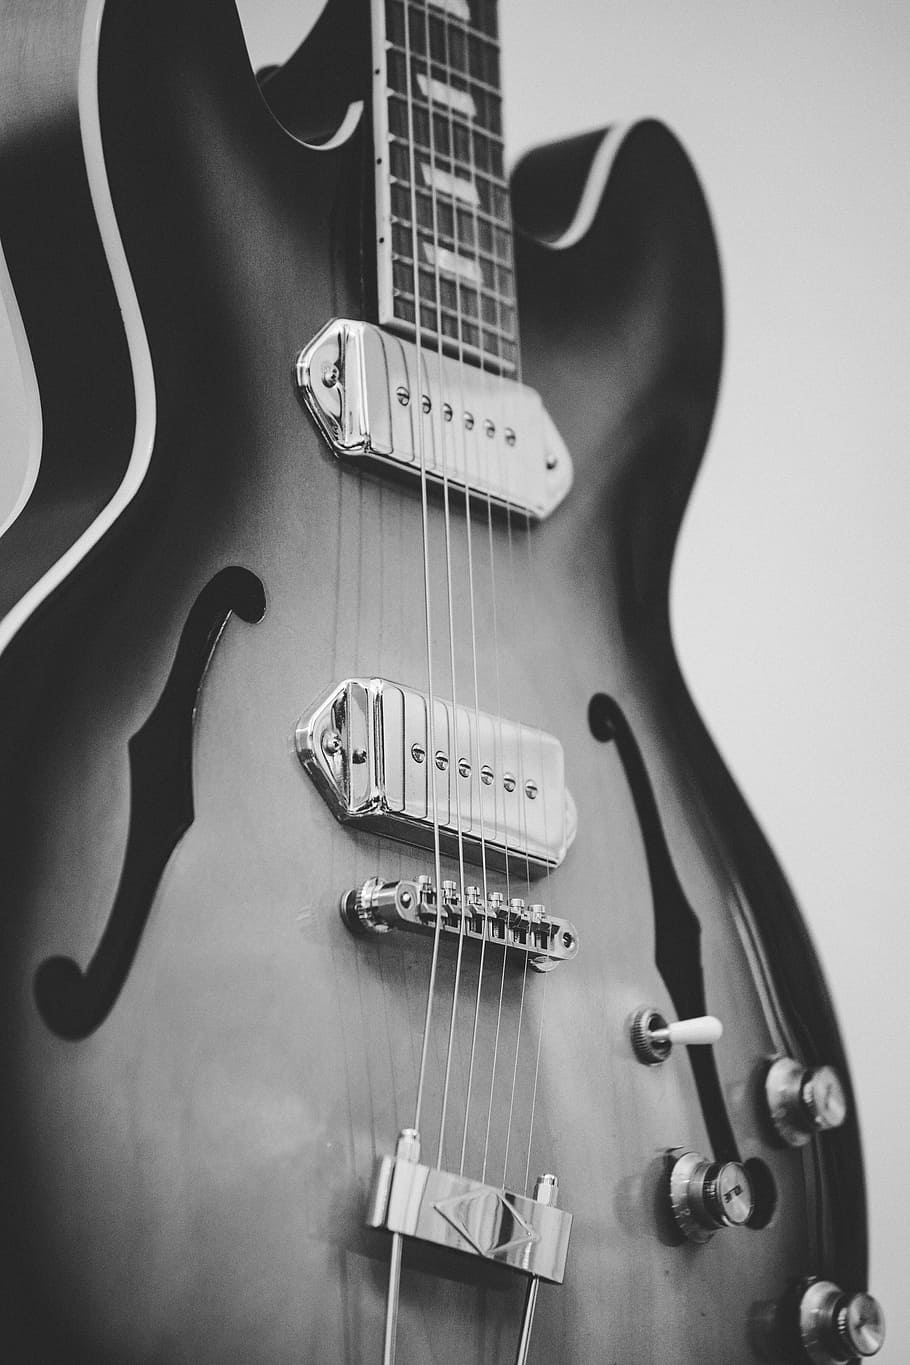 HD wallpaper: greyscale photo of jazz guitar, acoustic jazz guitar